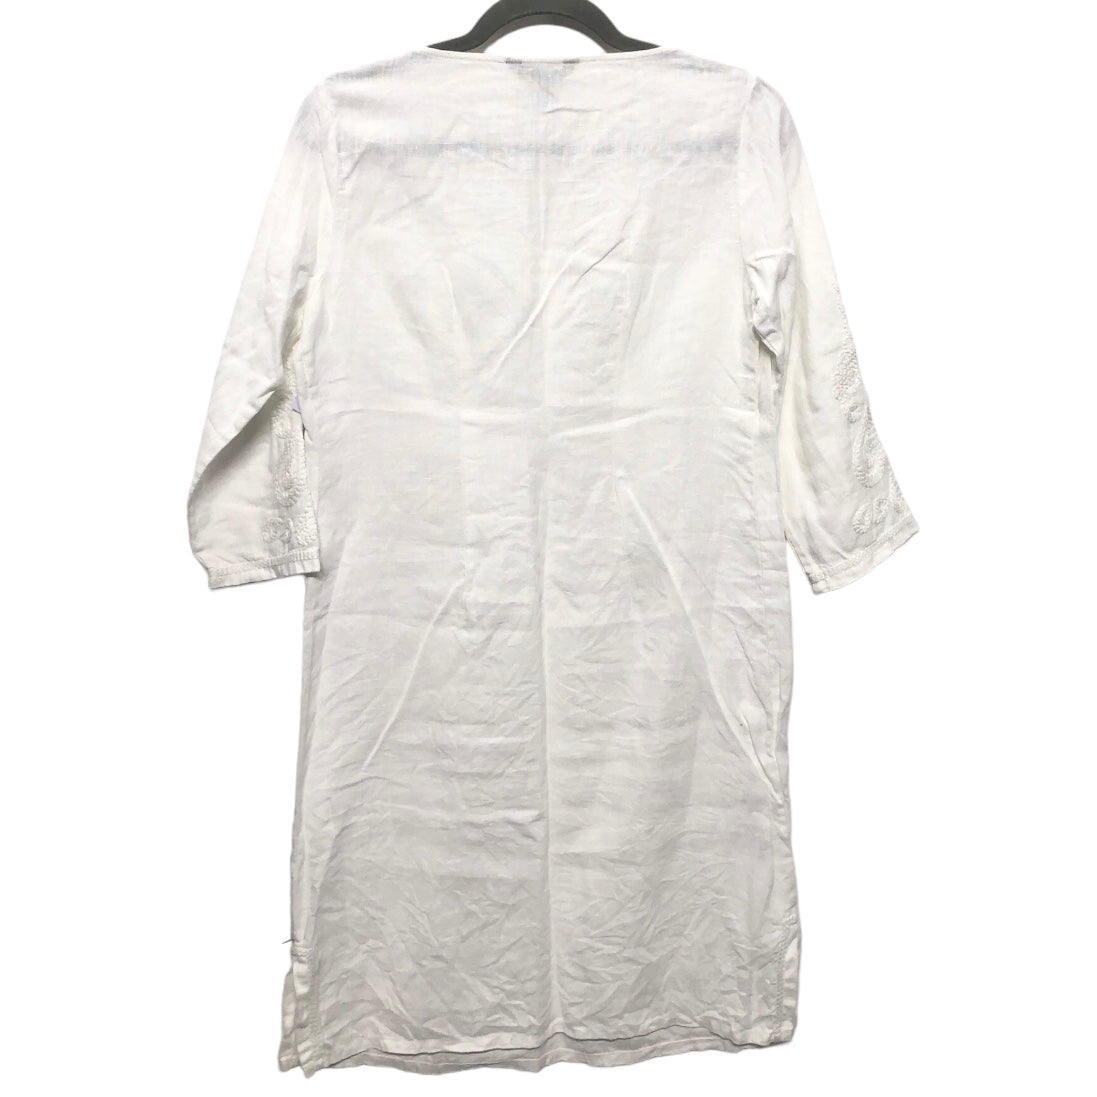 White Dress Casual Short Tommy Bahama, Size Xs